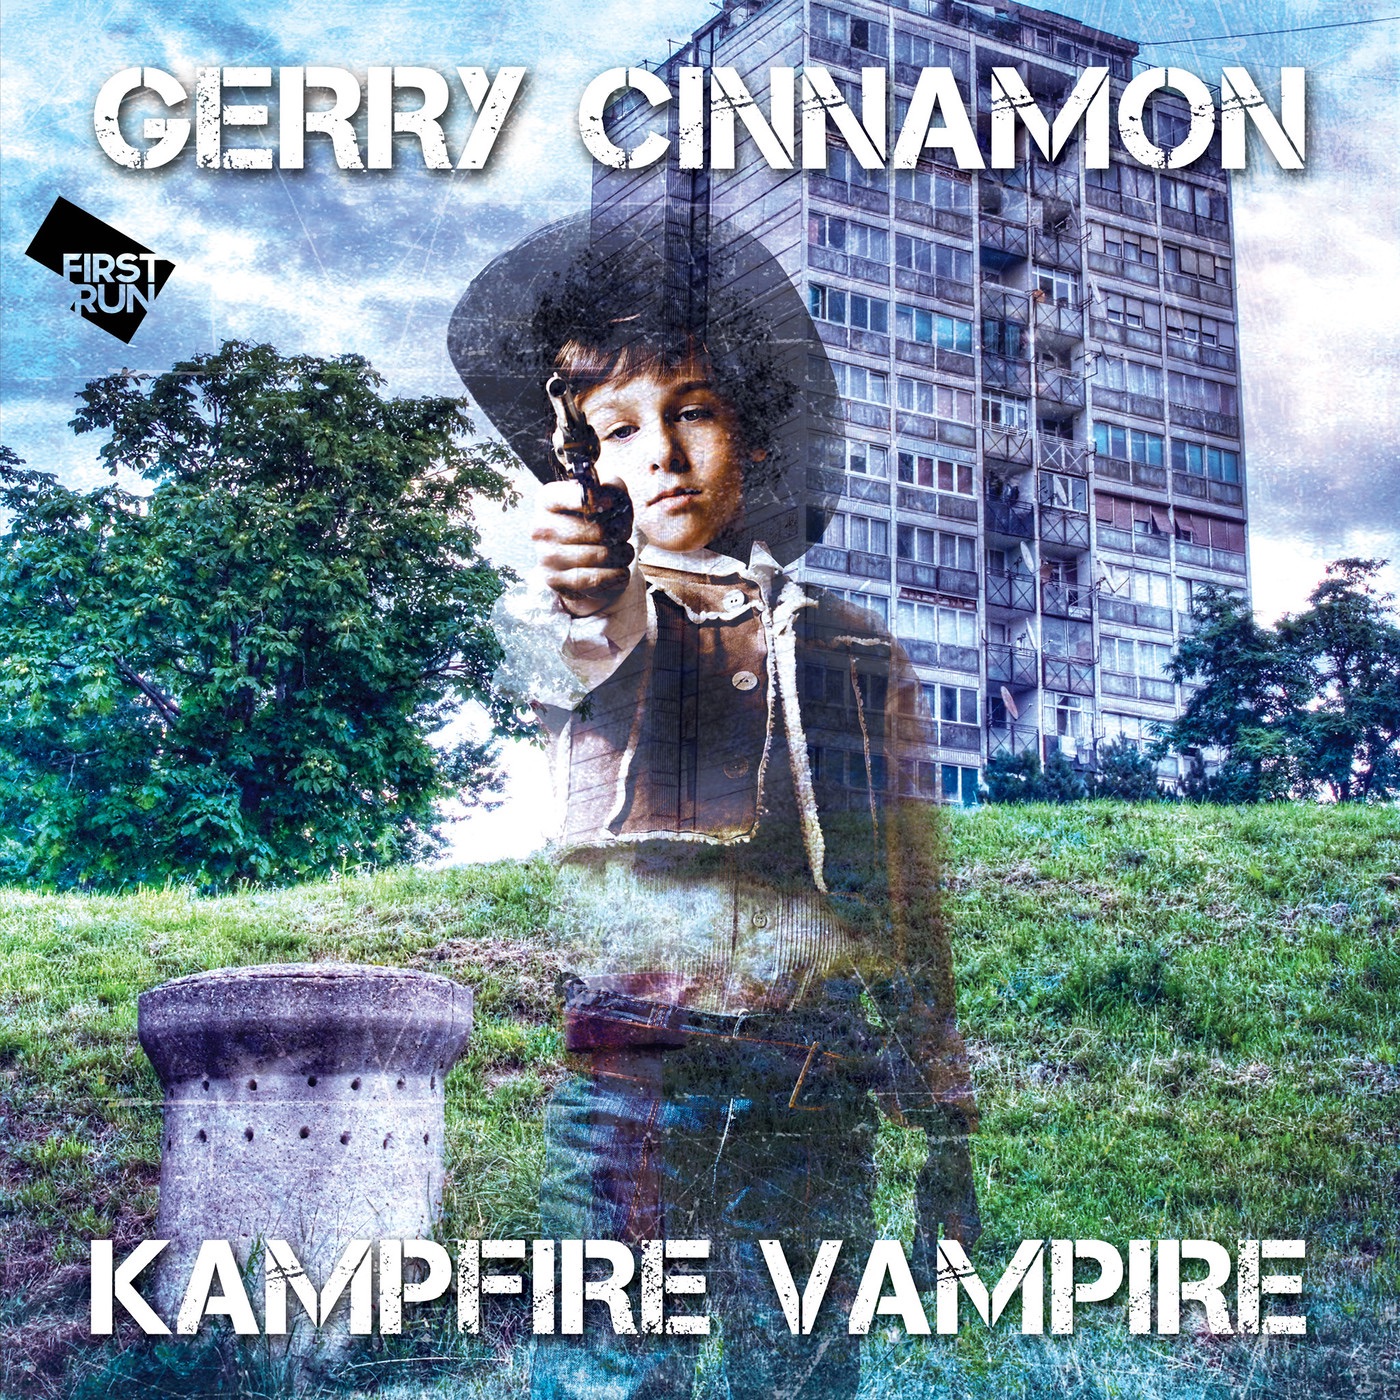 Art for Kampfire Vampire by Gerry Cinnamon